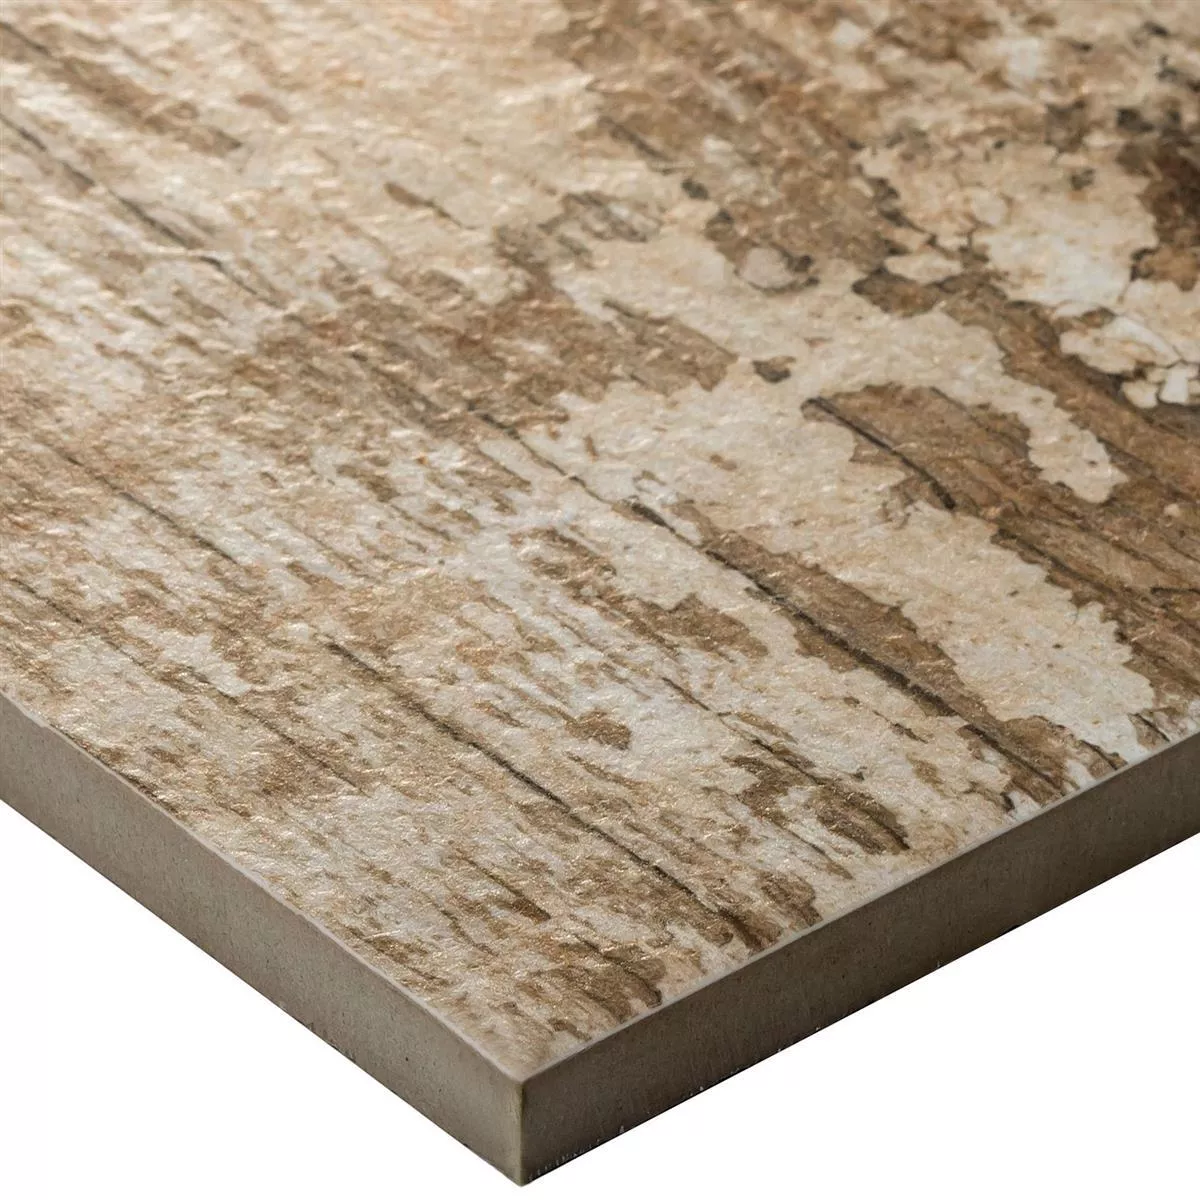 Sample Wood Optic Floor Tiles Mountain Nature 15x90cm